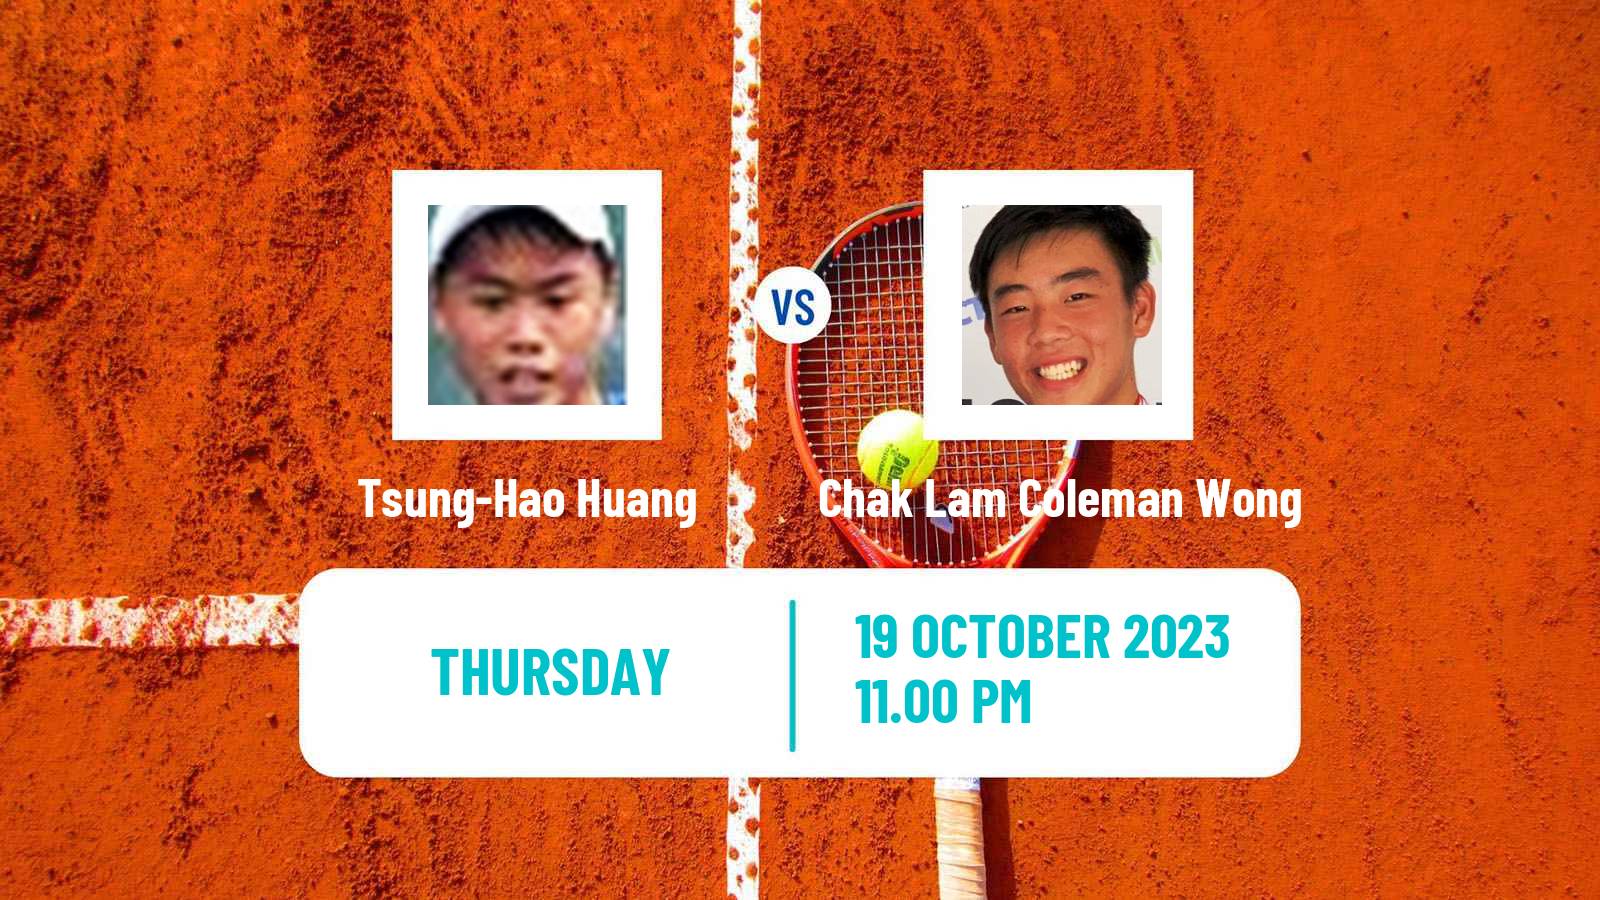 Tennis Shenzhen 3 Challenger Men Tsung-Hao Huang - Chak Lam Coleman Wong